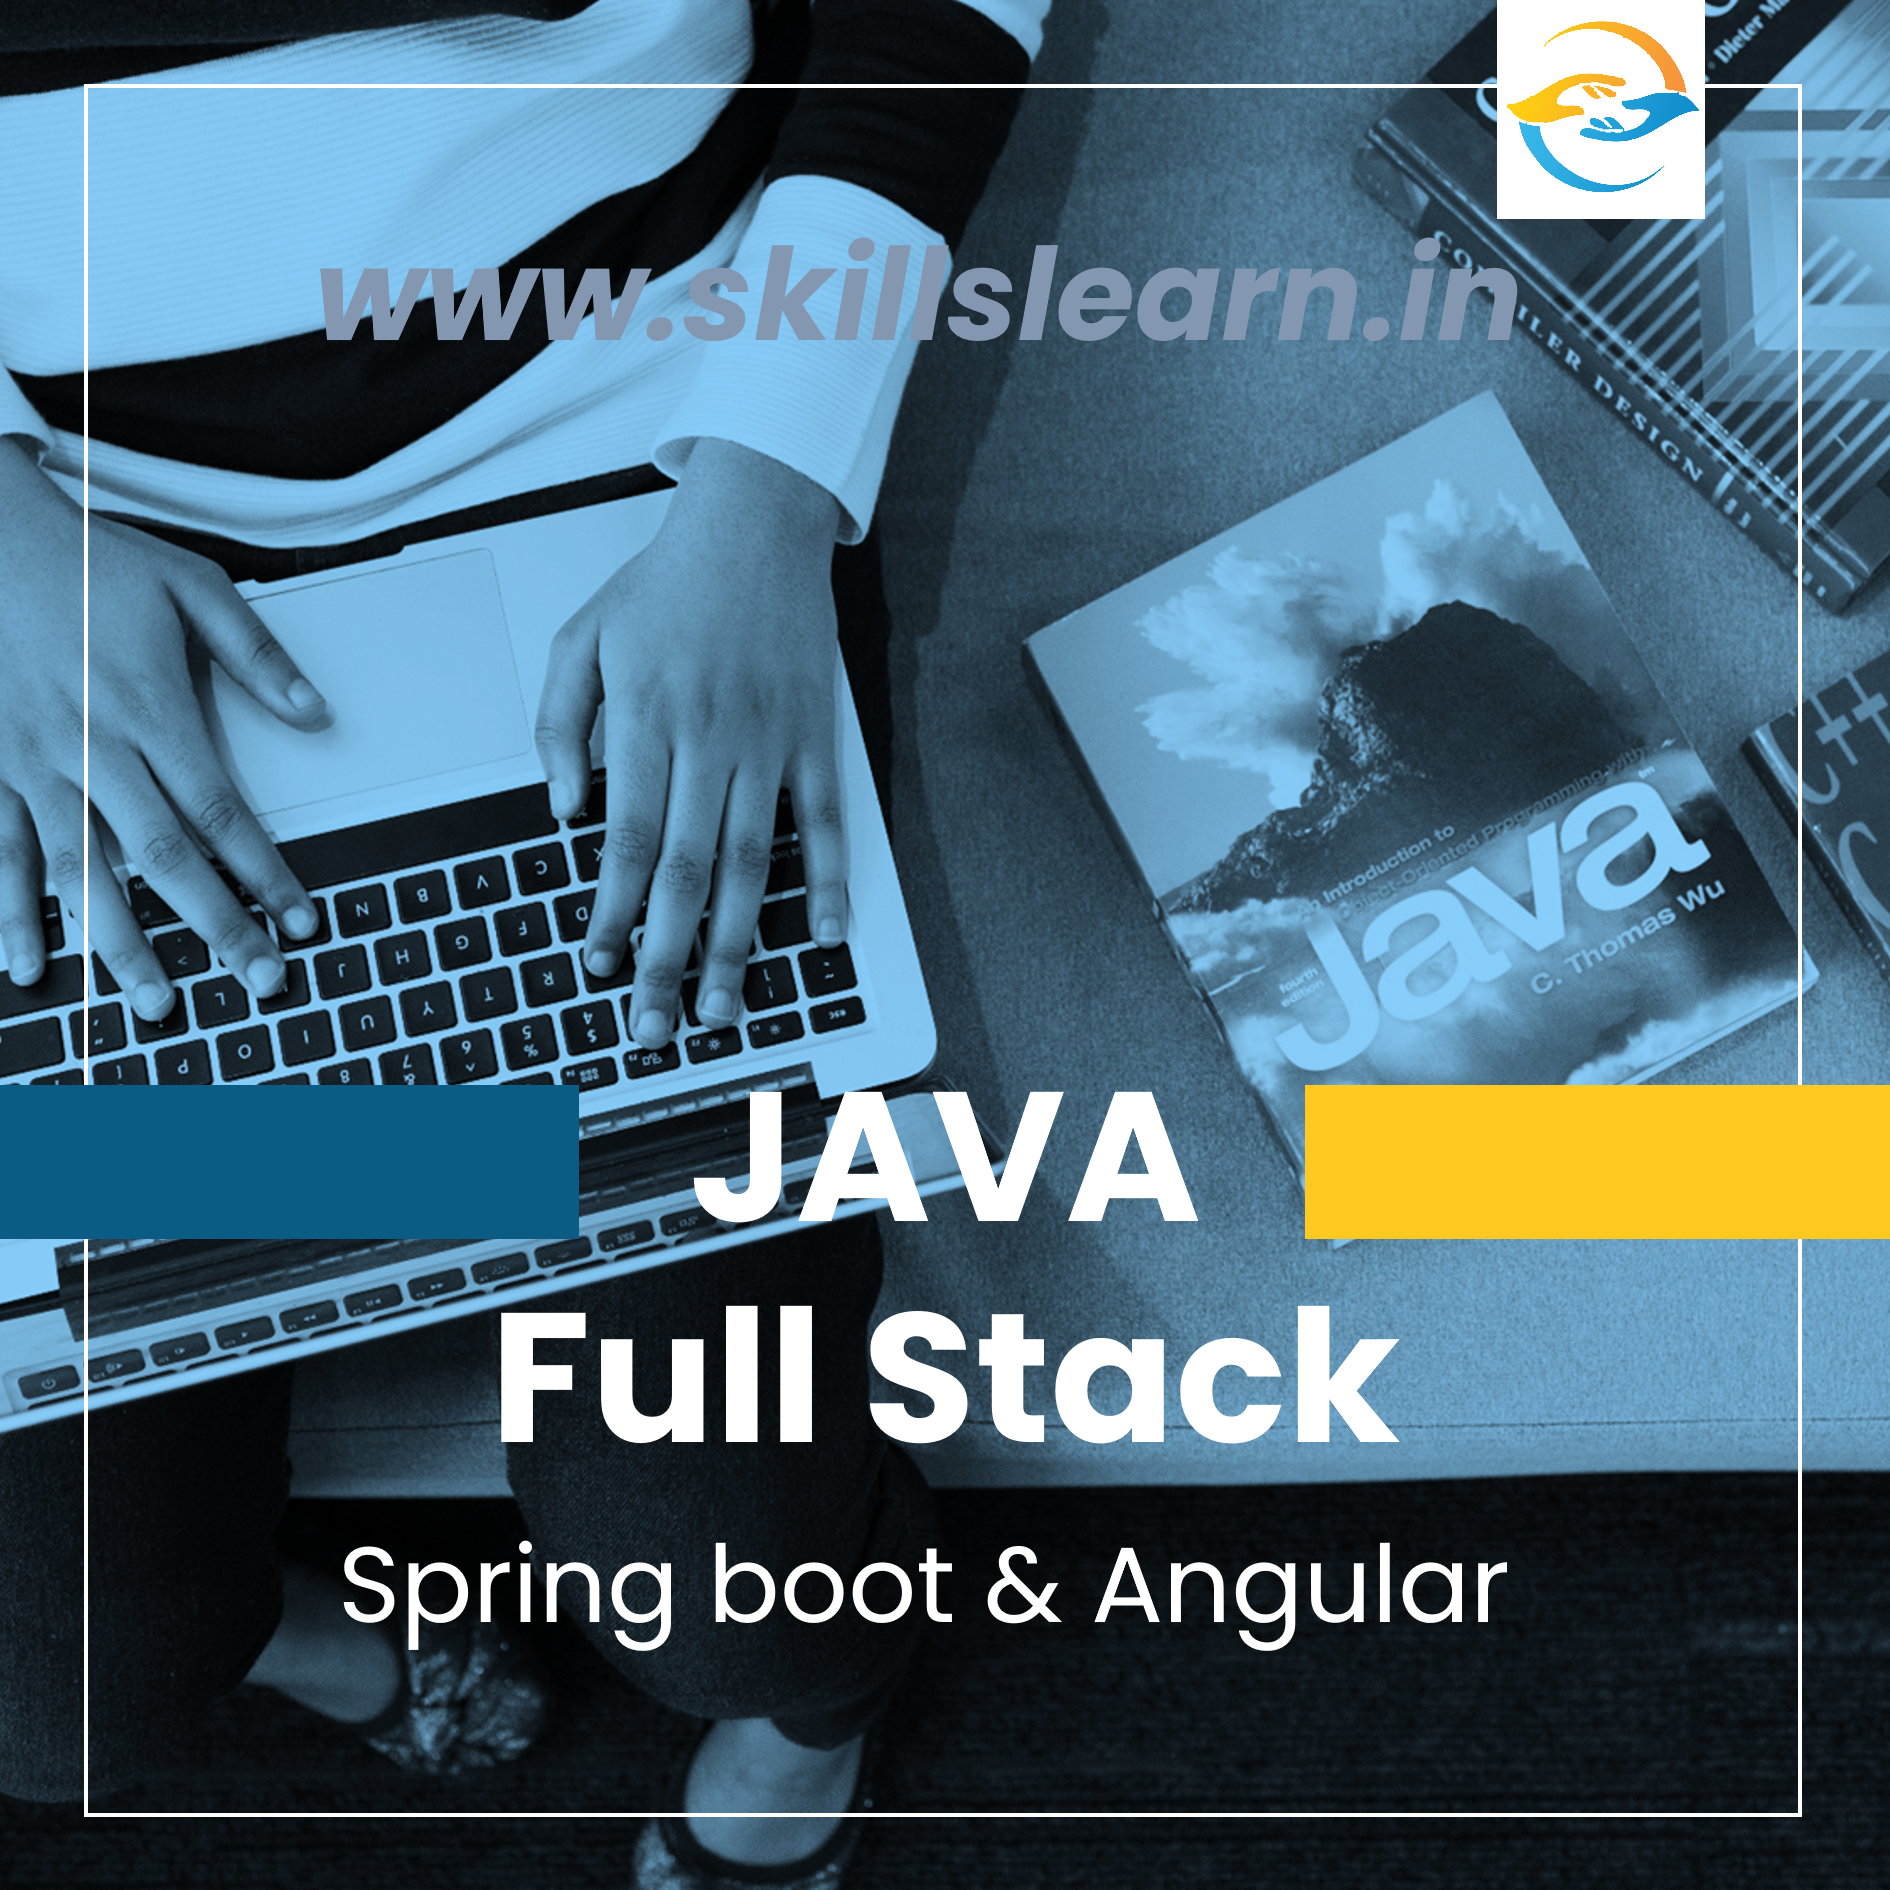 JAVA Full Stack- Spring boot and Angular